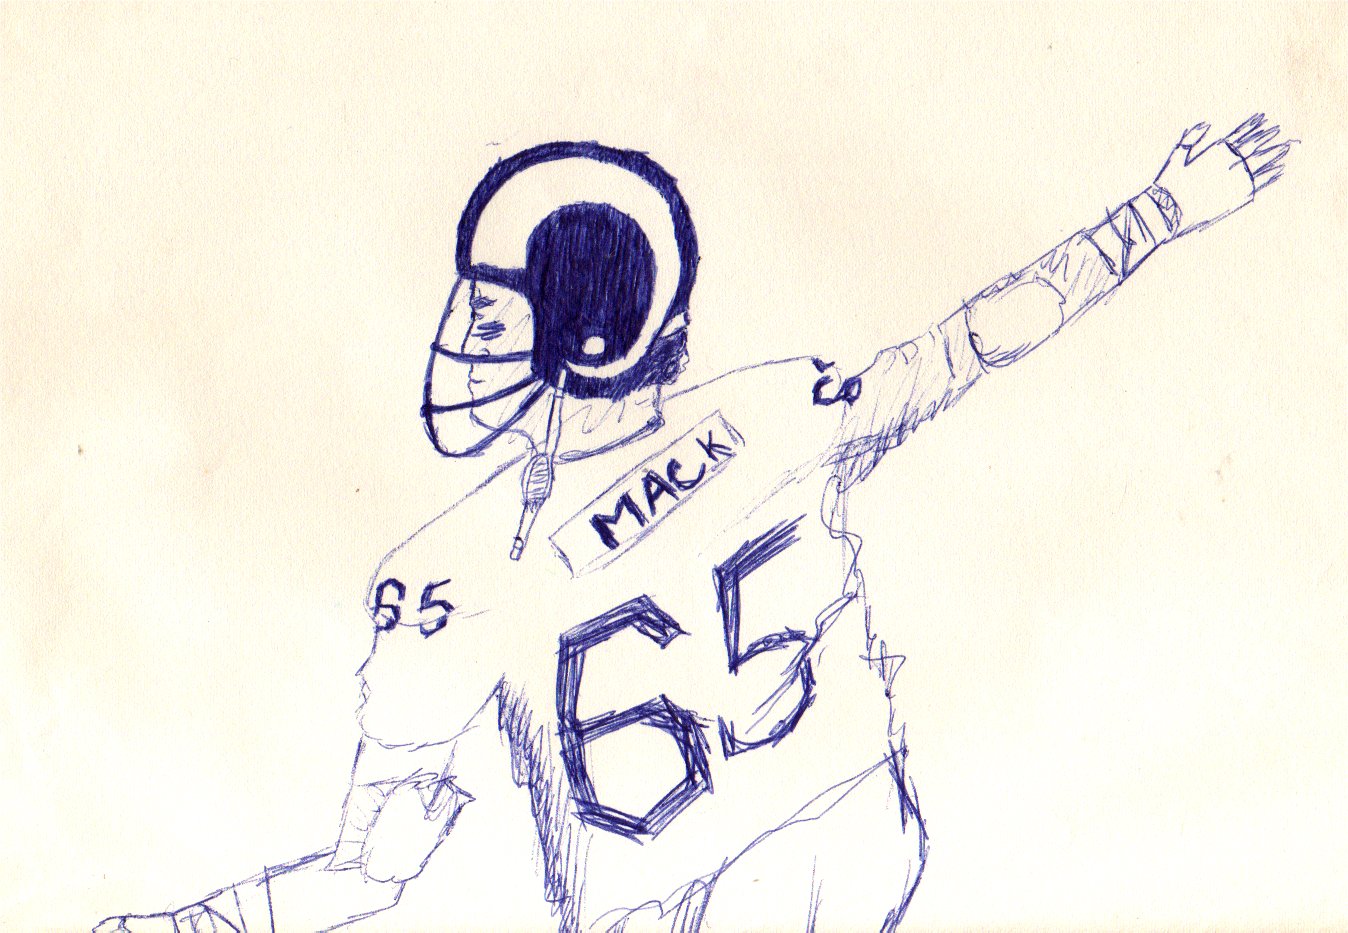 Sketch, Art, Portrait, Football, NFL